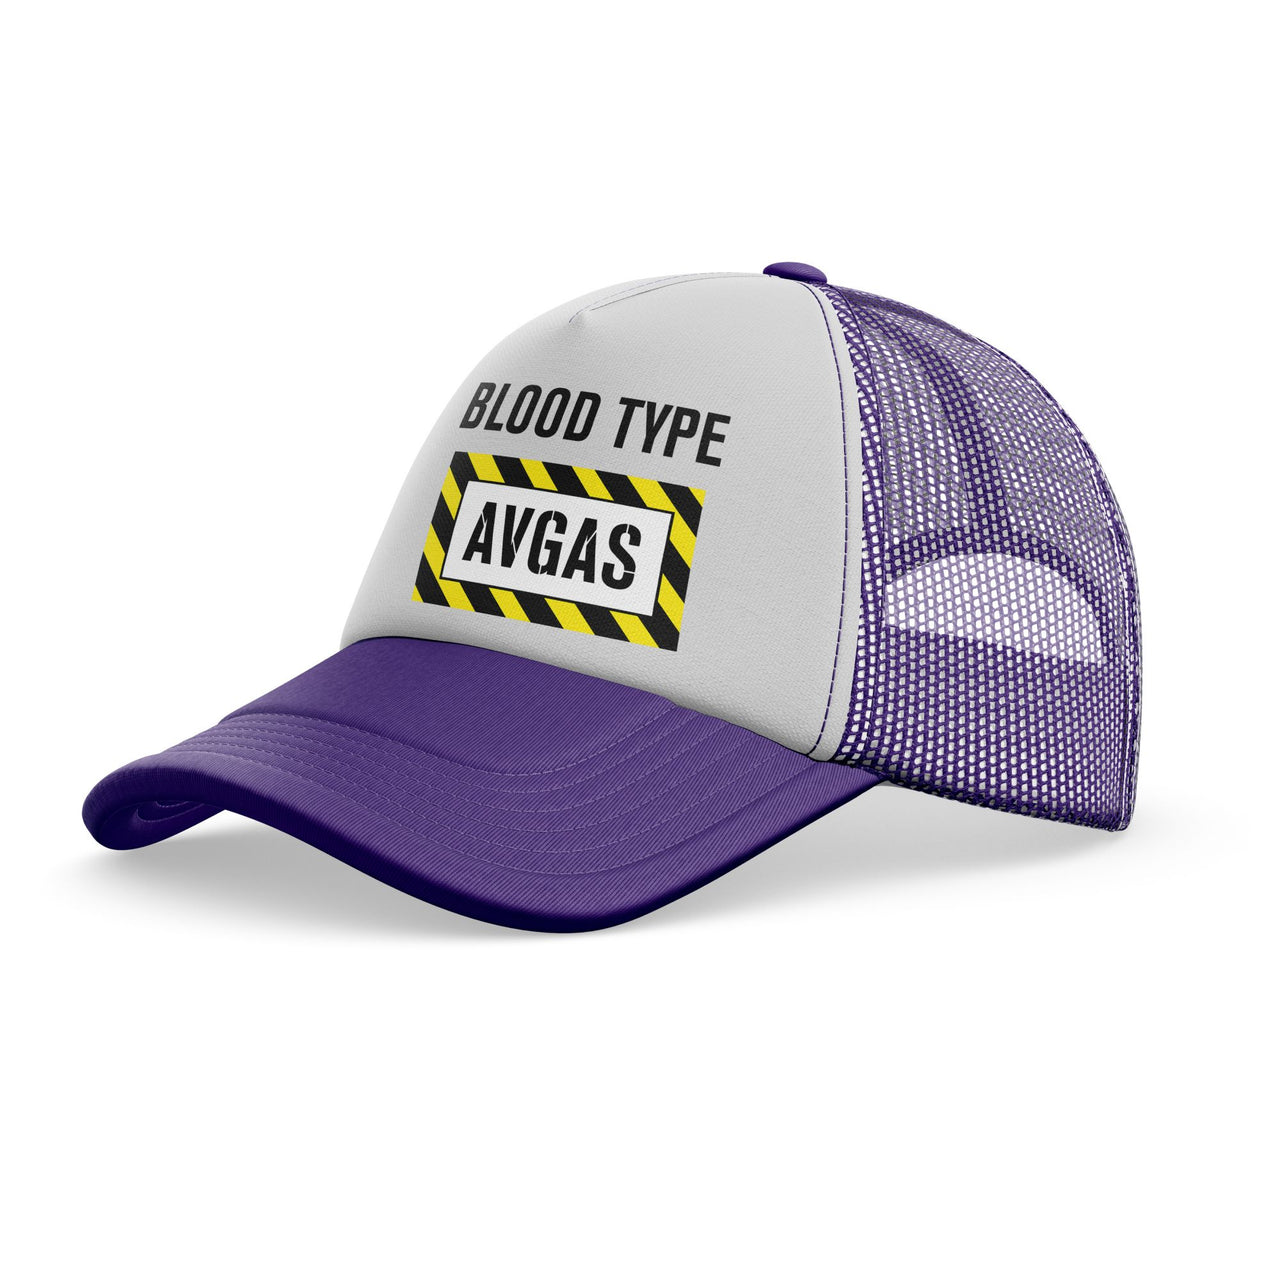 Blood Type AVGAS Designed Trucker Caps & Hats